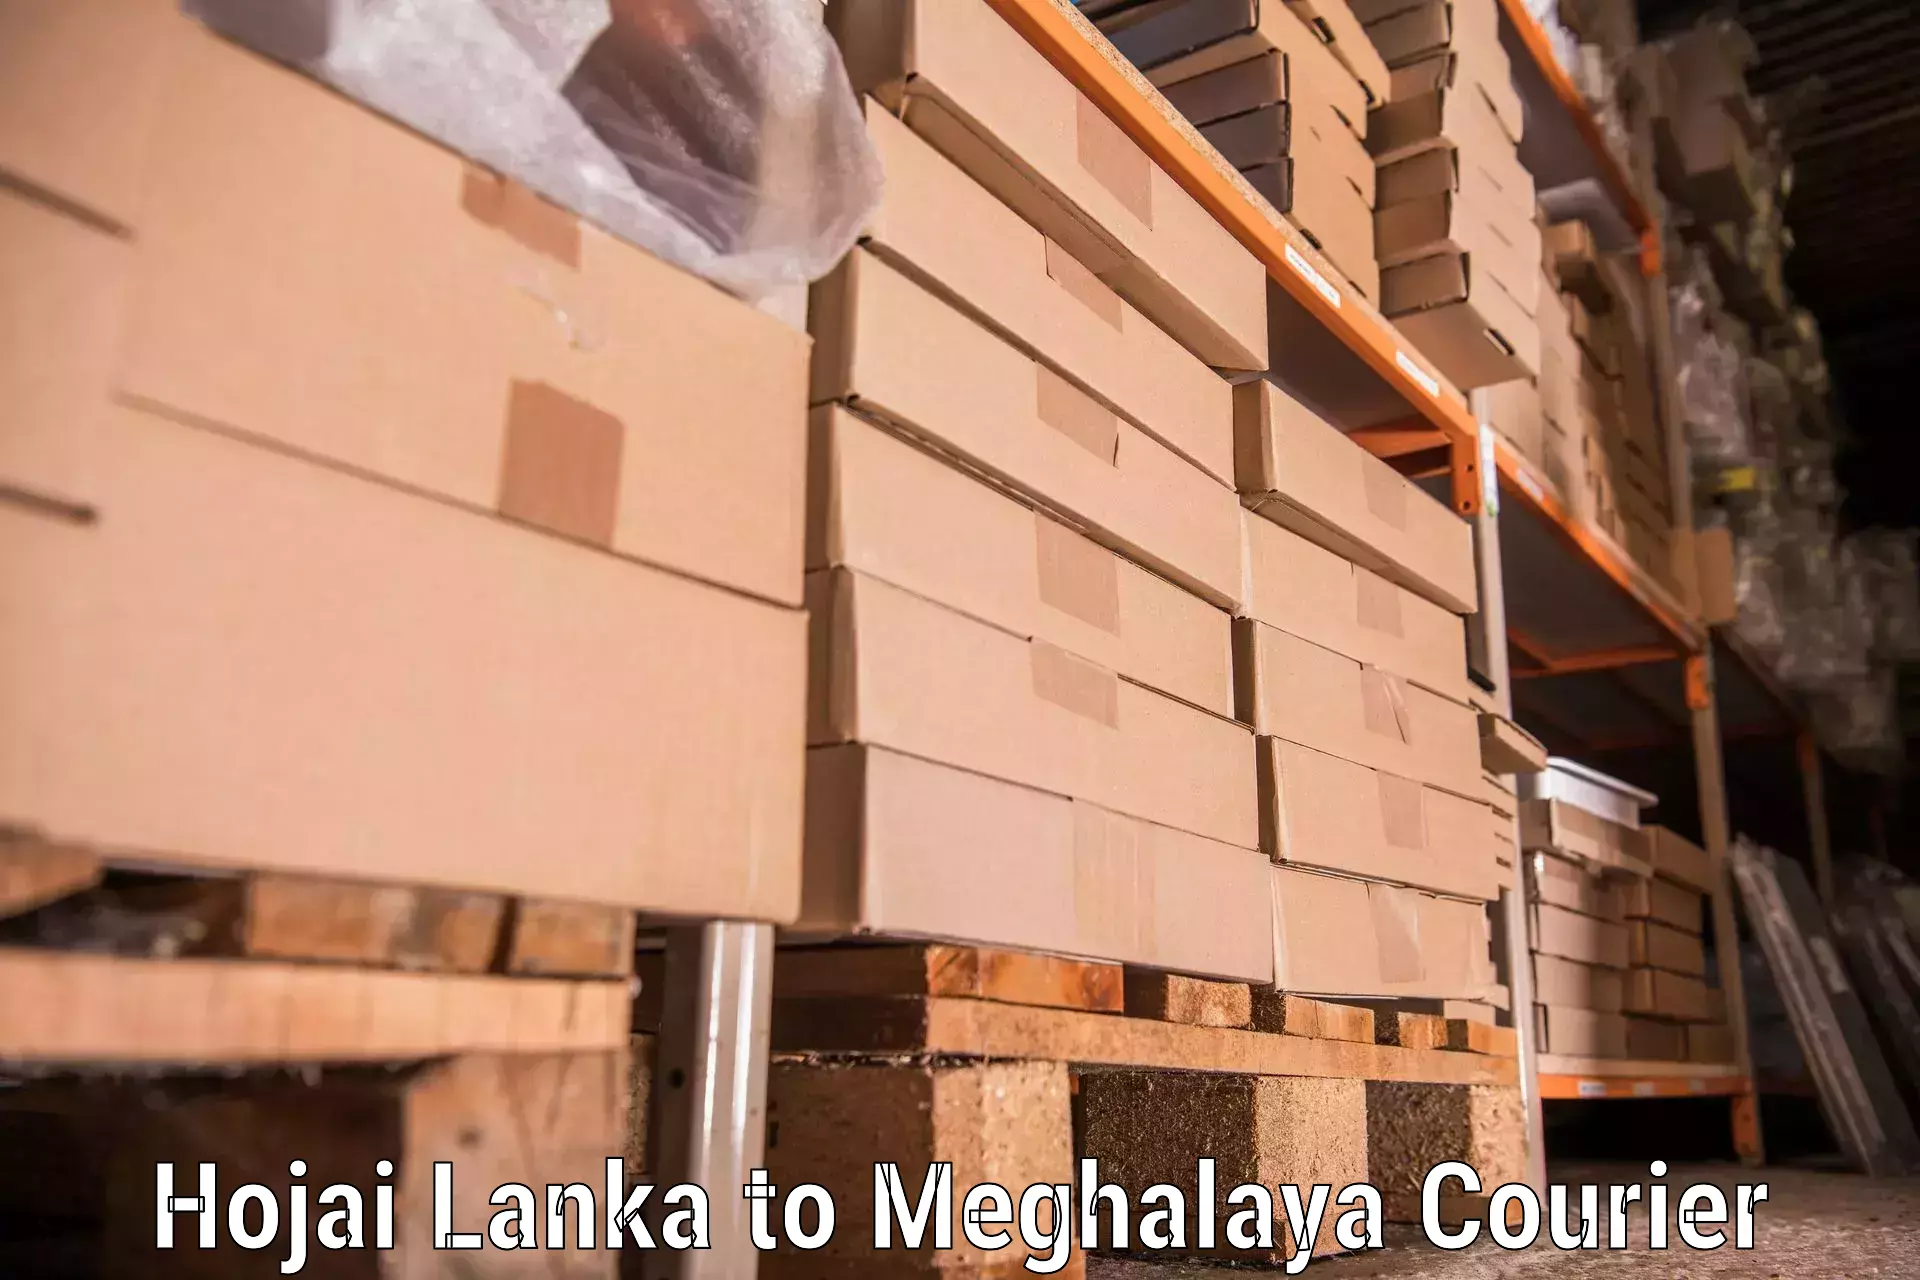 Hassle-free relocation Hojai Lanka to Meghalaya